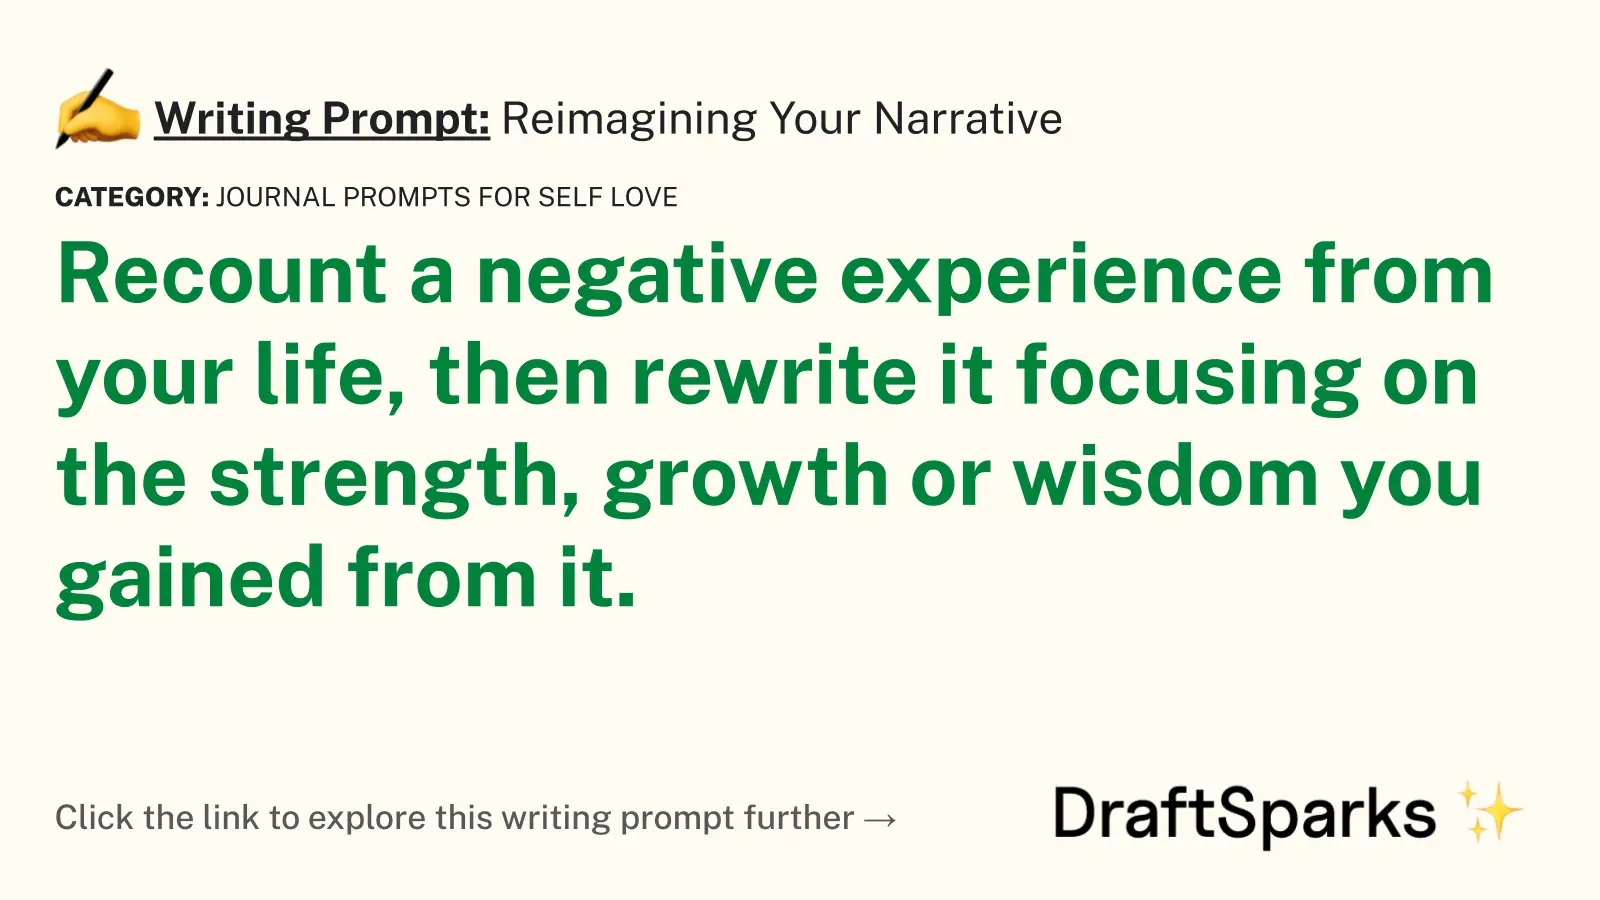 Reimagining Your Narrative